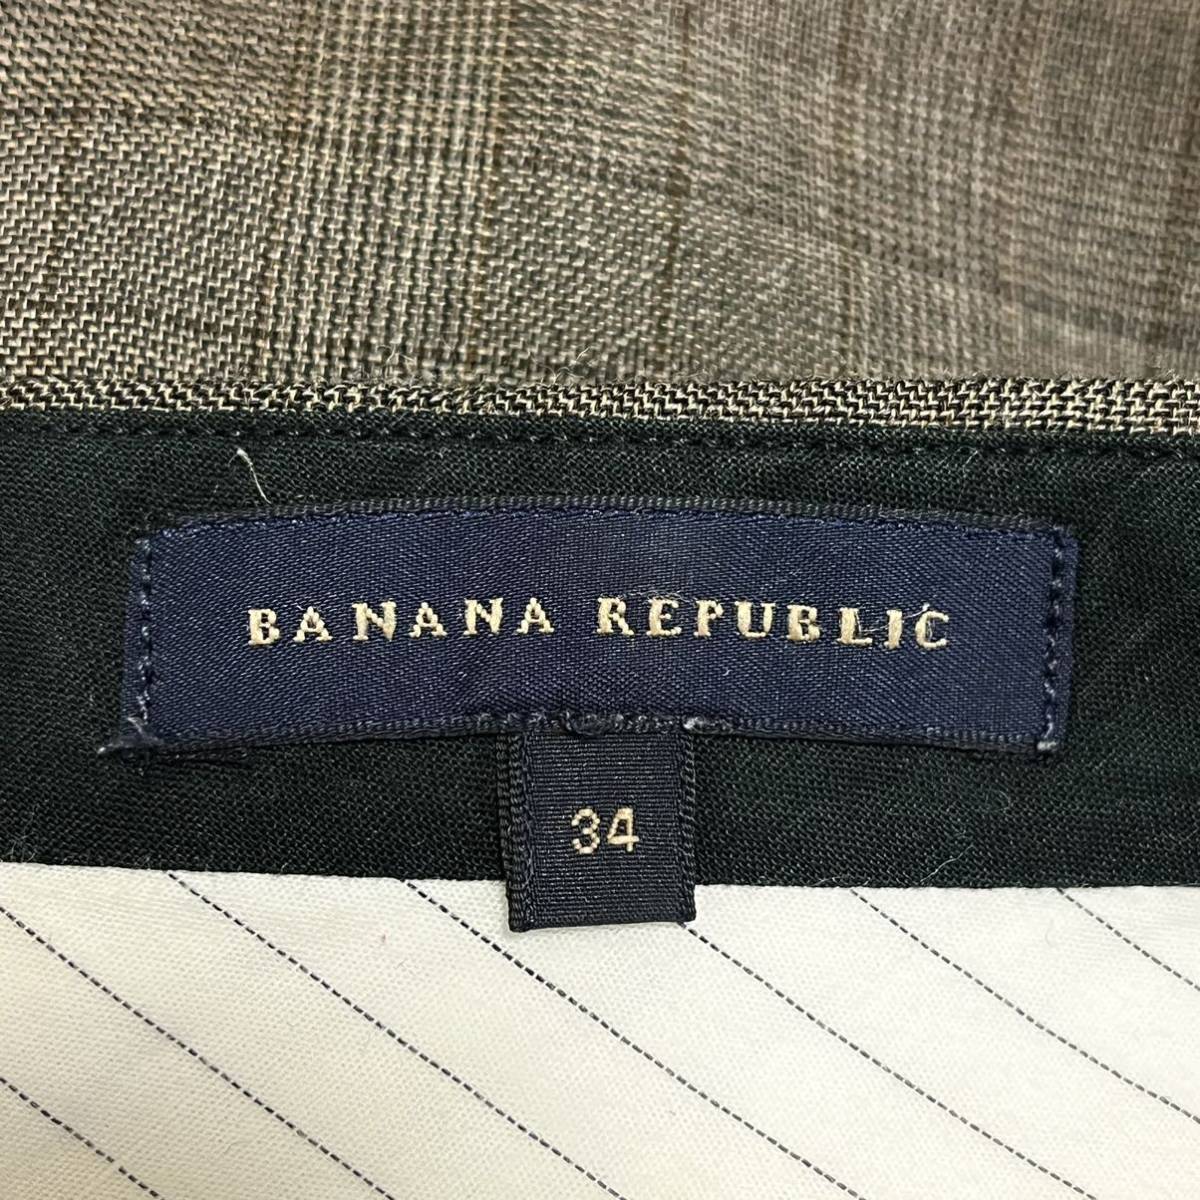  on goods **BANANA REPUBLIC Banana Republic * slacks pants bottoms office check wool Brown men's size 34/DD7401